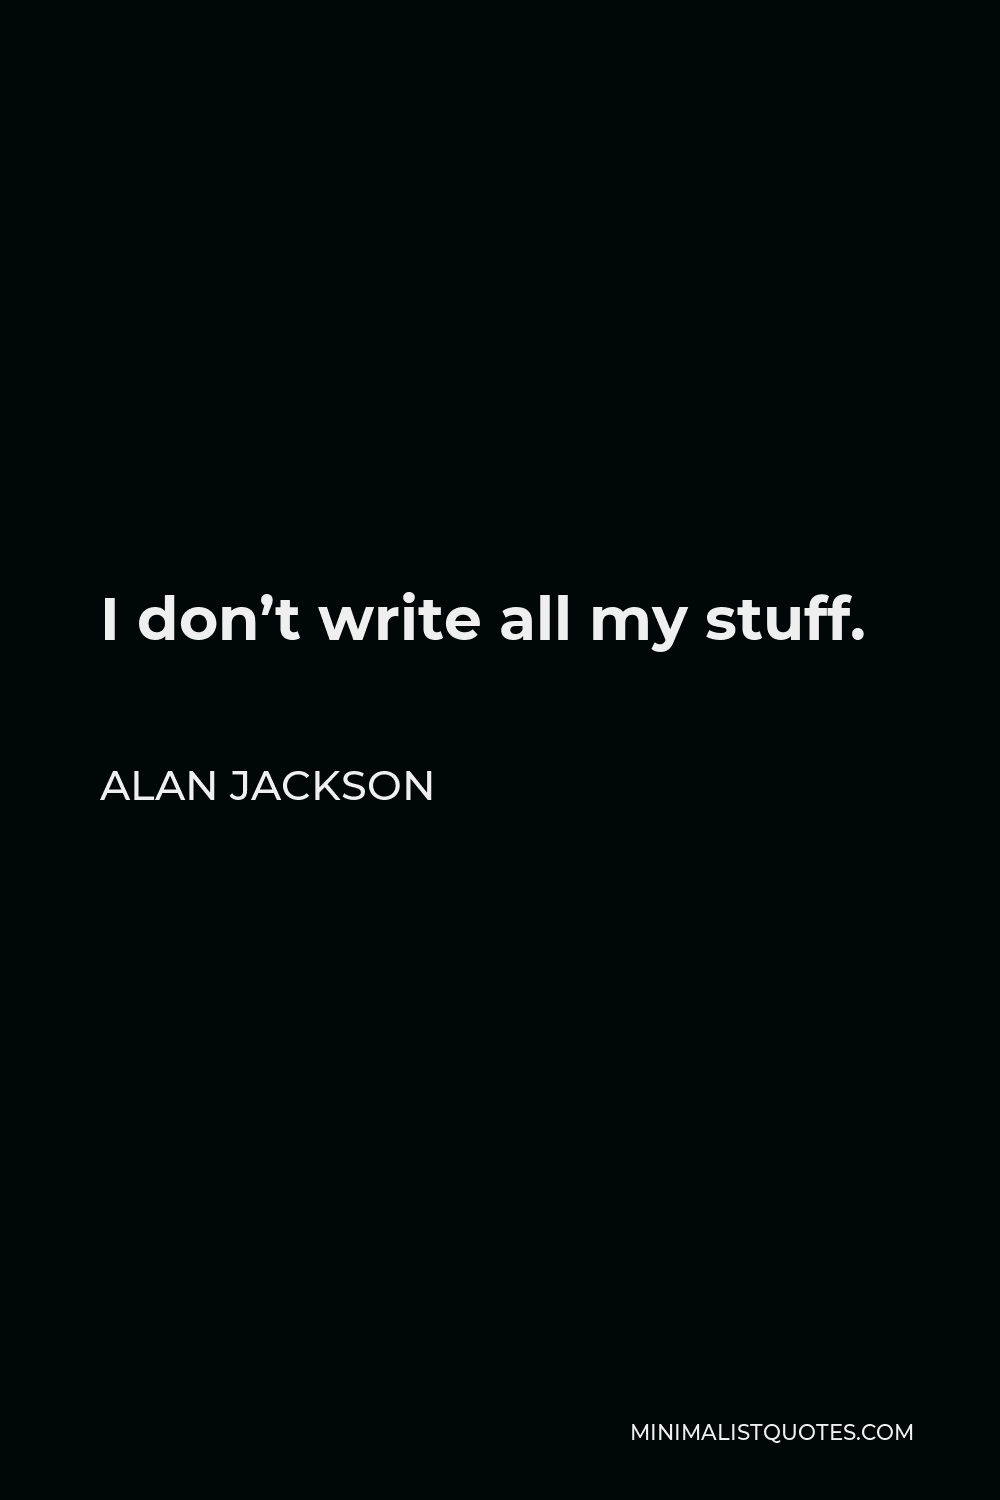 Alan Jackson Quote - I don’t write all my stuff.